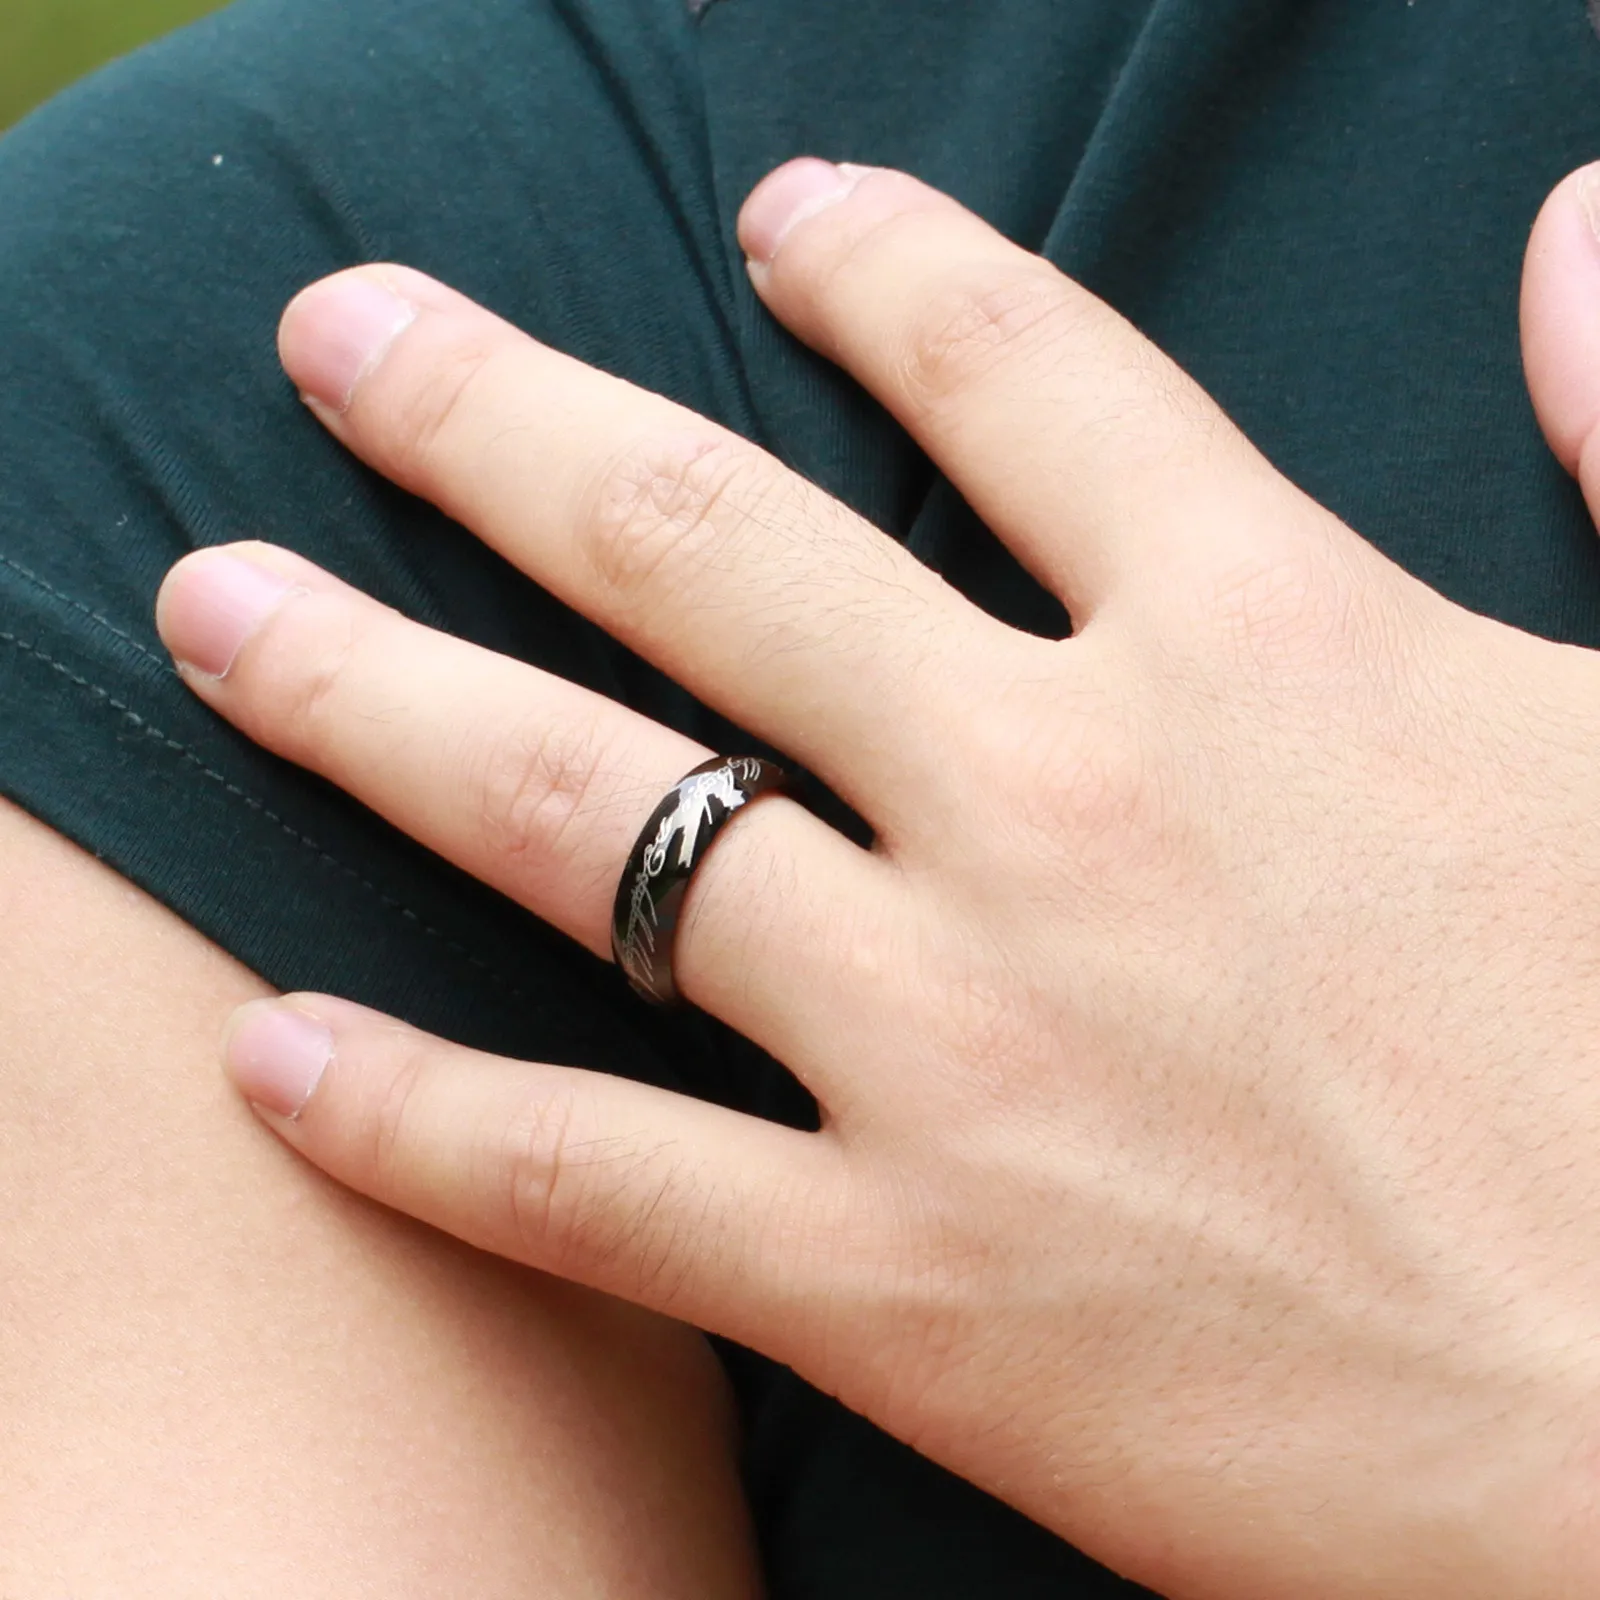 Modern Men's Wedding Ring Trends by Dora: Stylish Choices